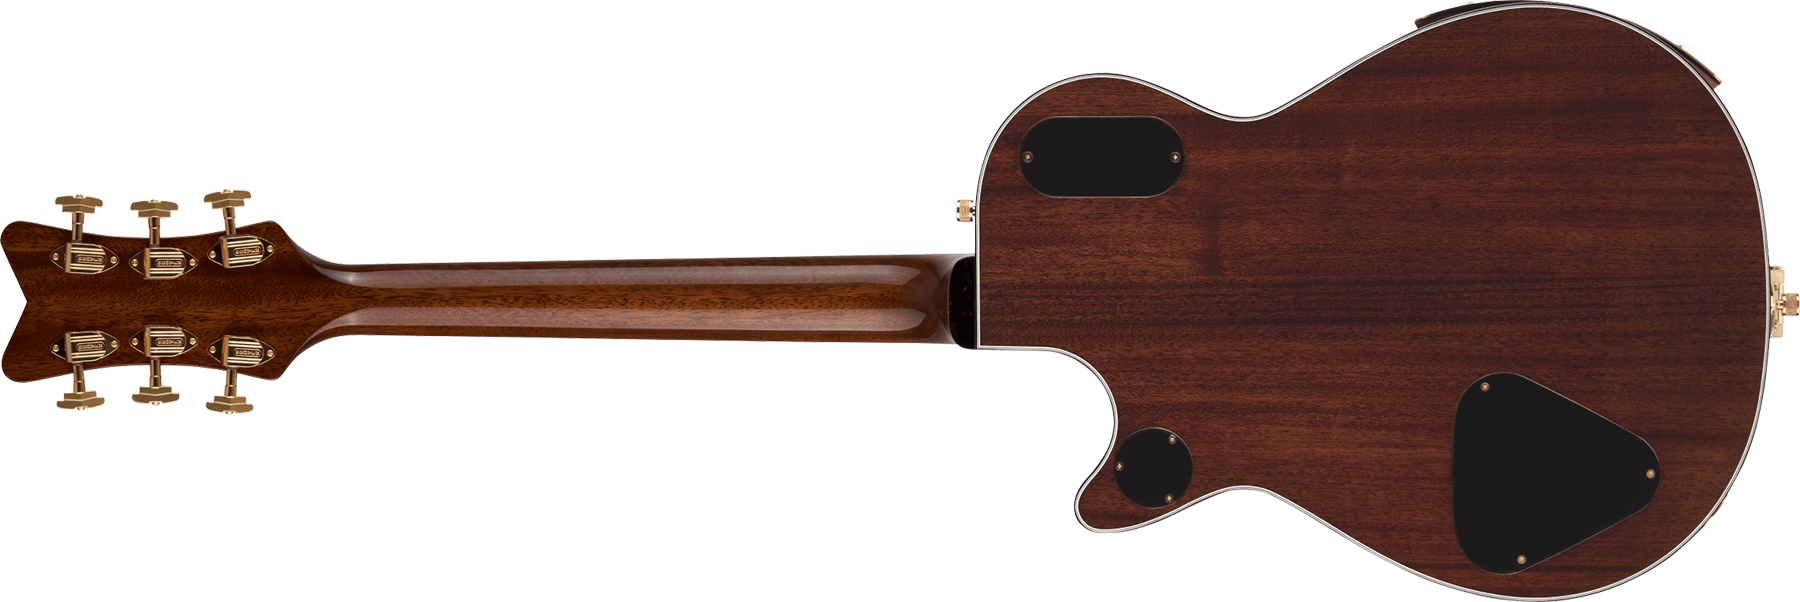 Gretsch G6134t-ltd Penguin Koa Bigsby Pro Jap 2h Trem Eb - Natural - Guitarra eléctrica de corte único. - Variation 1